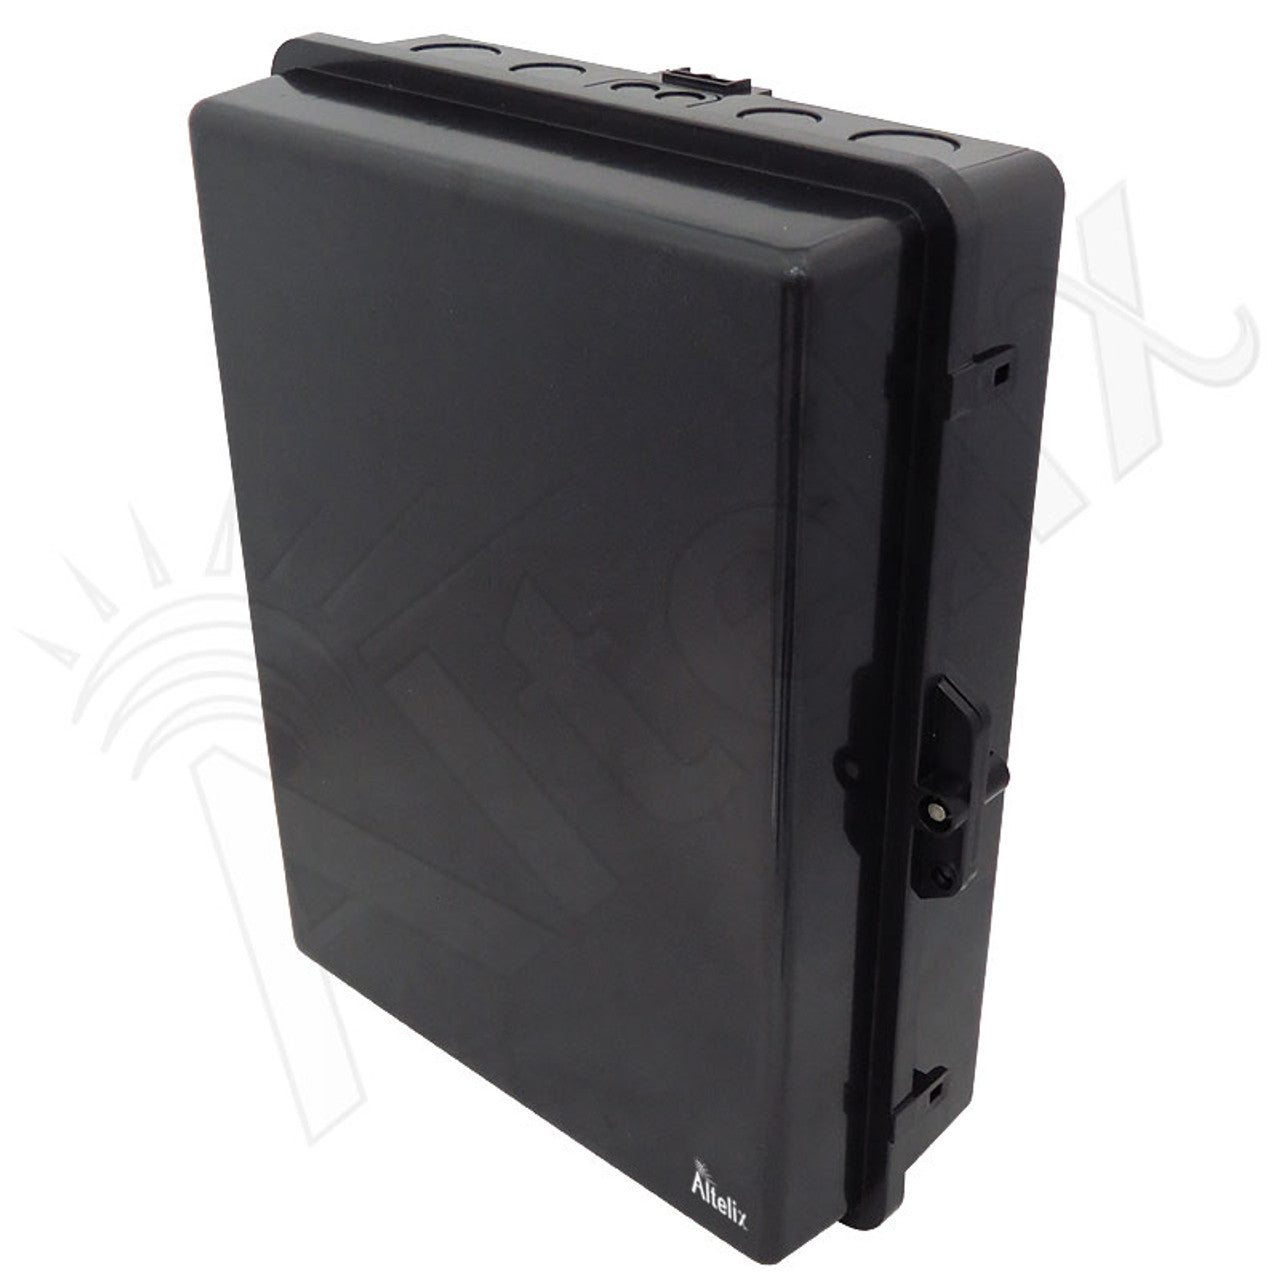 Buy black Altelix 17x14x6 PC + ABS Weatherproof Utility Box NEMA Enclosure with Pole Mount Kit